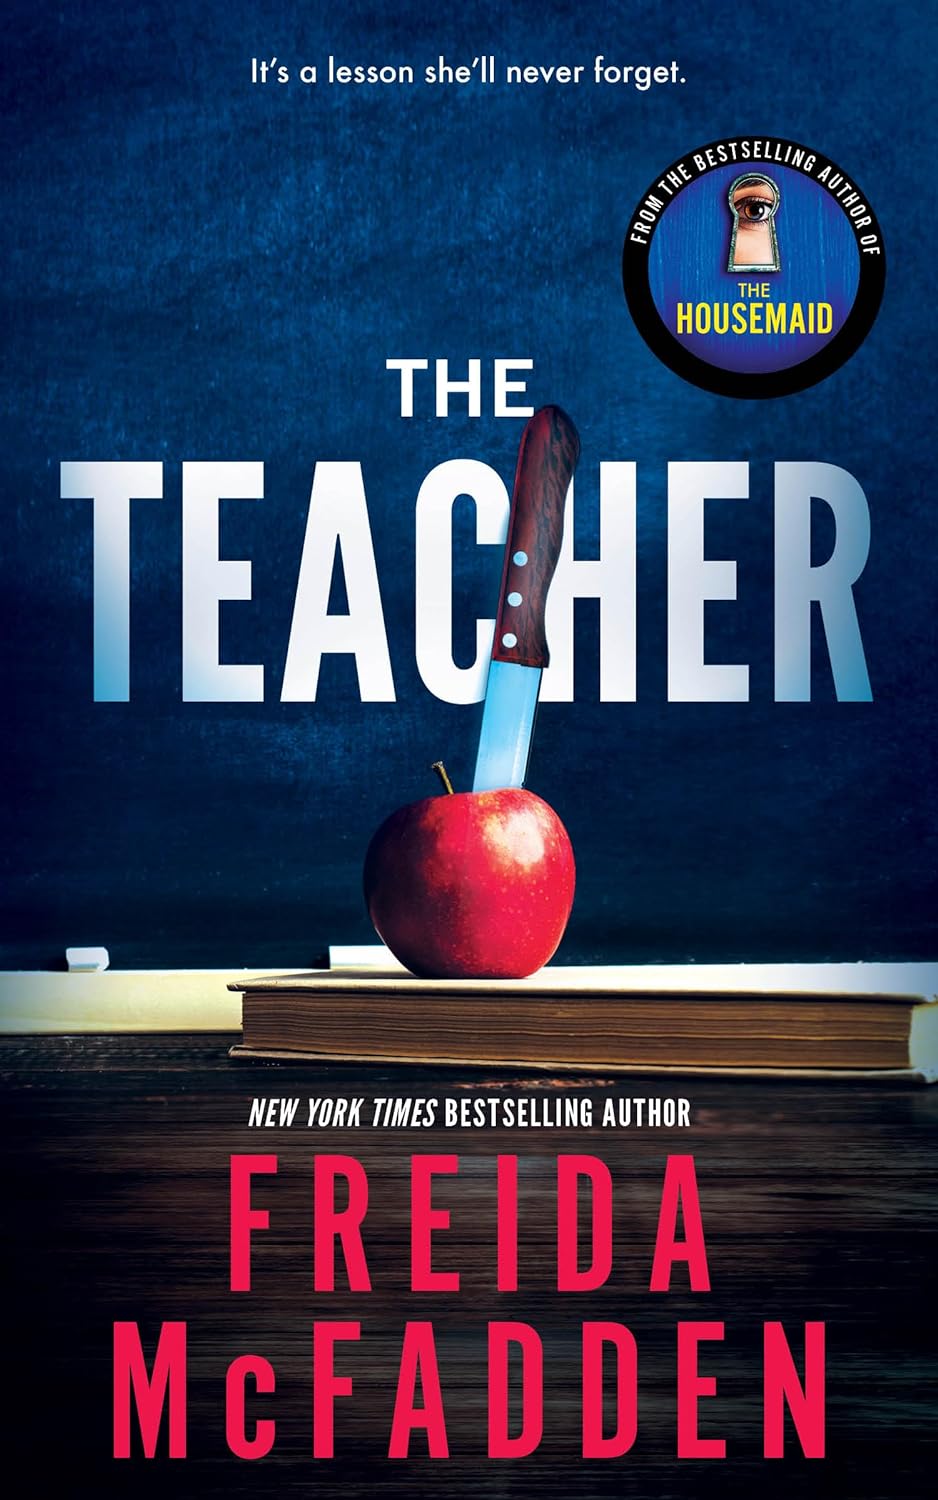 Image for "The Teacher"